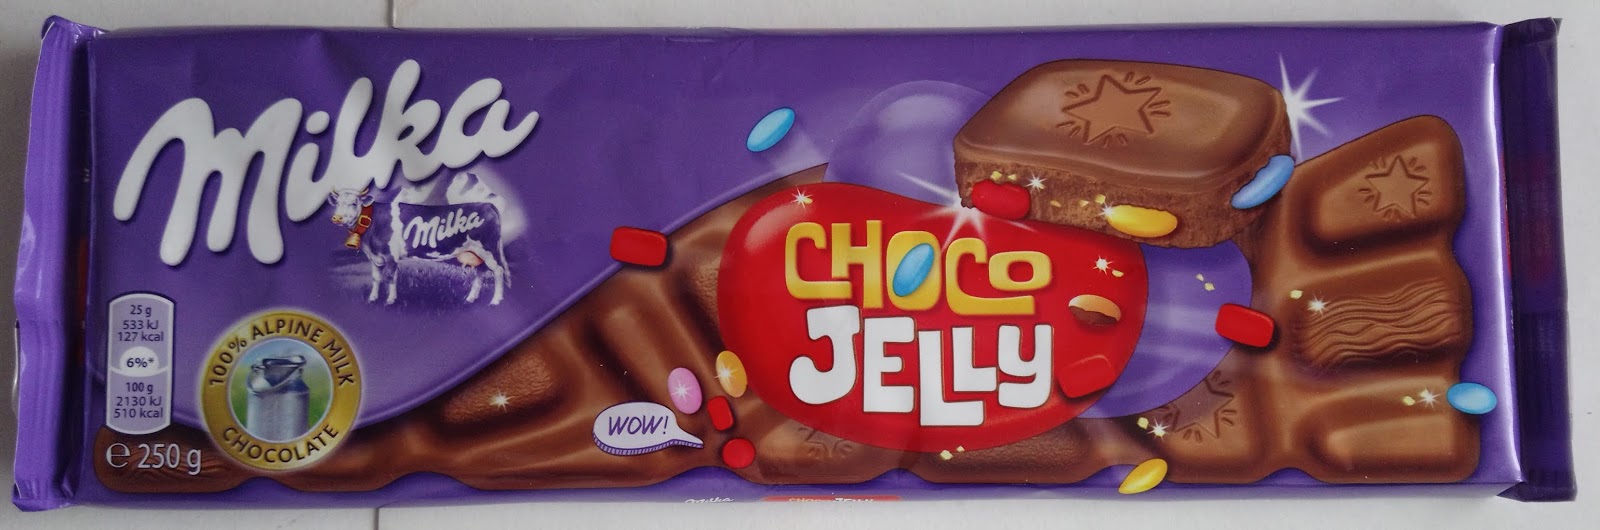 Choco jelly. Милка Choco Jelly. Шоколад Milka Choco Jelly 250гр. Шоколад Милка 300 гр. Милка 250г Choco Jelly 135 (1*15) импорт.